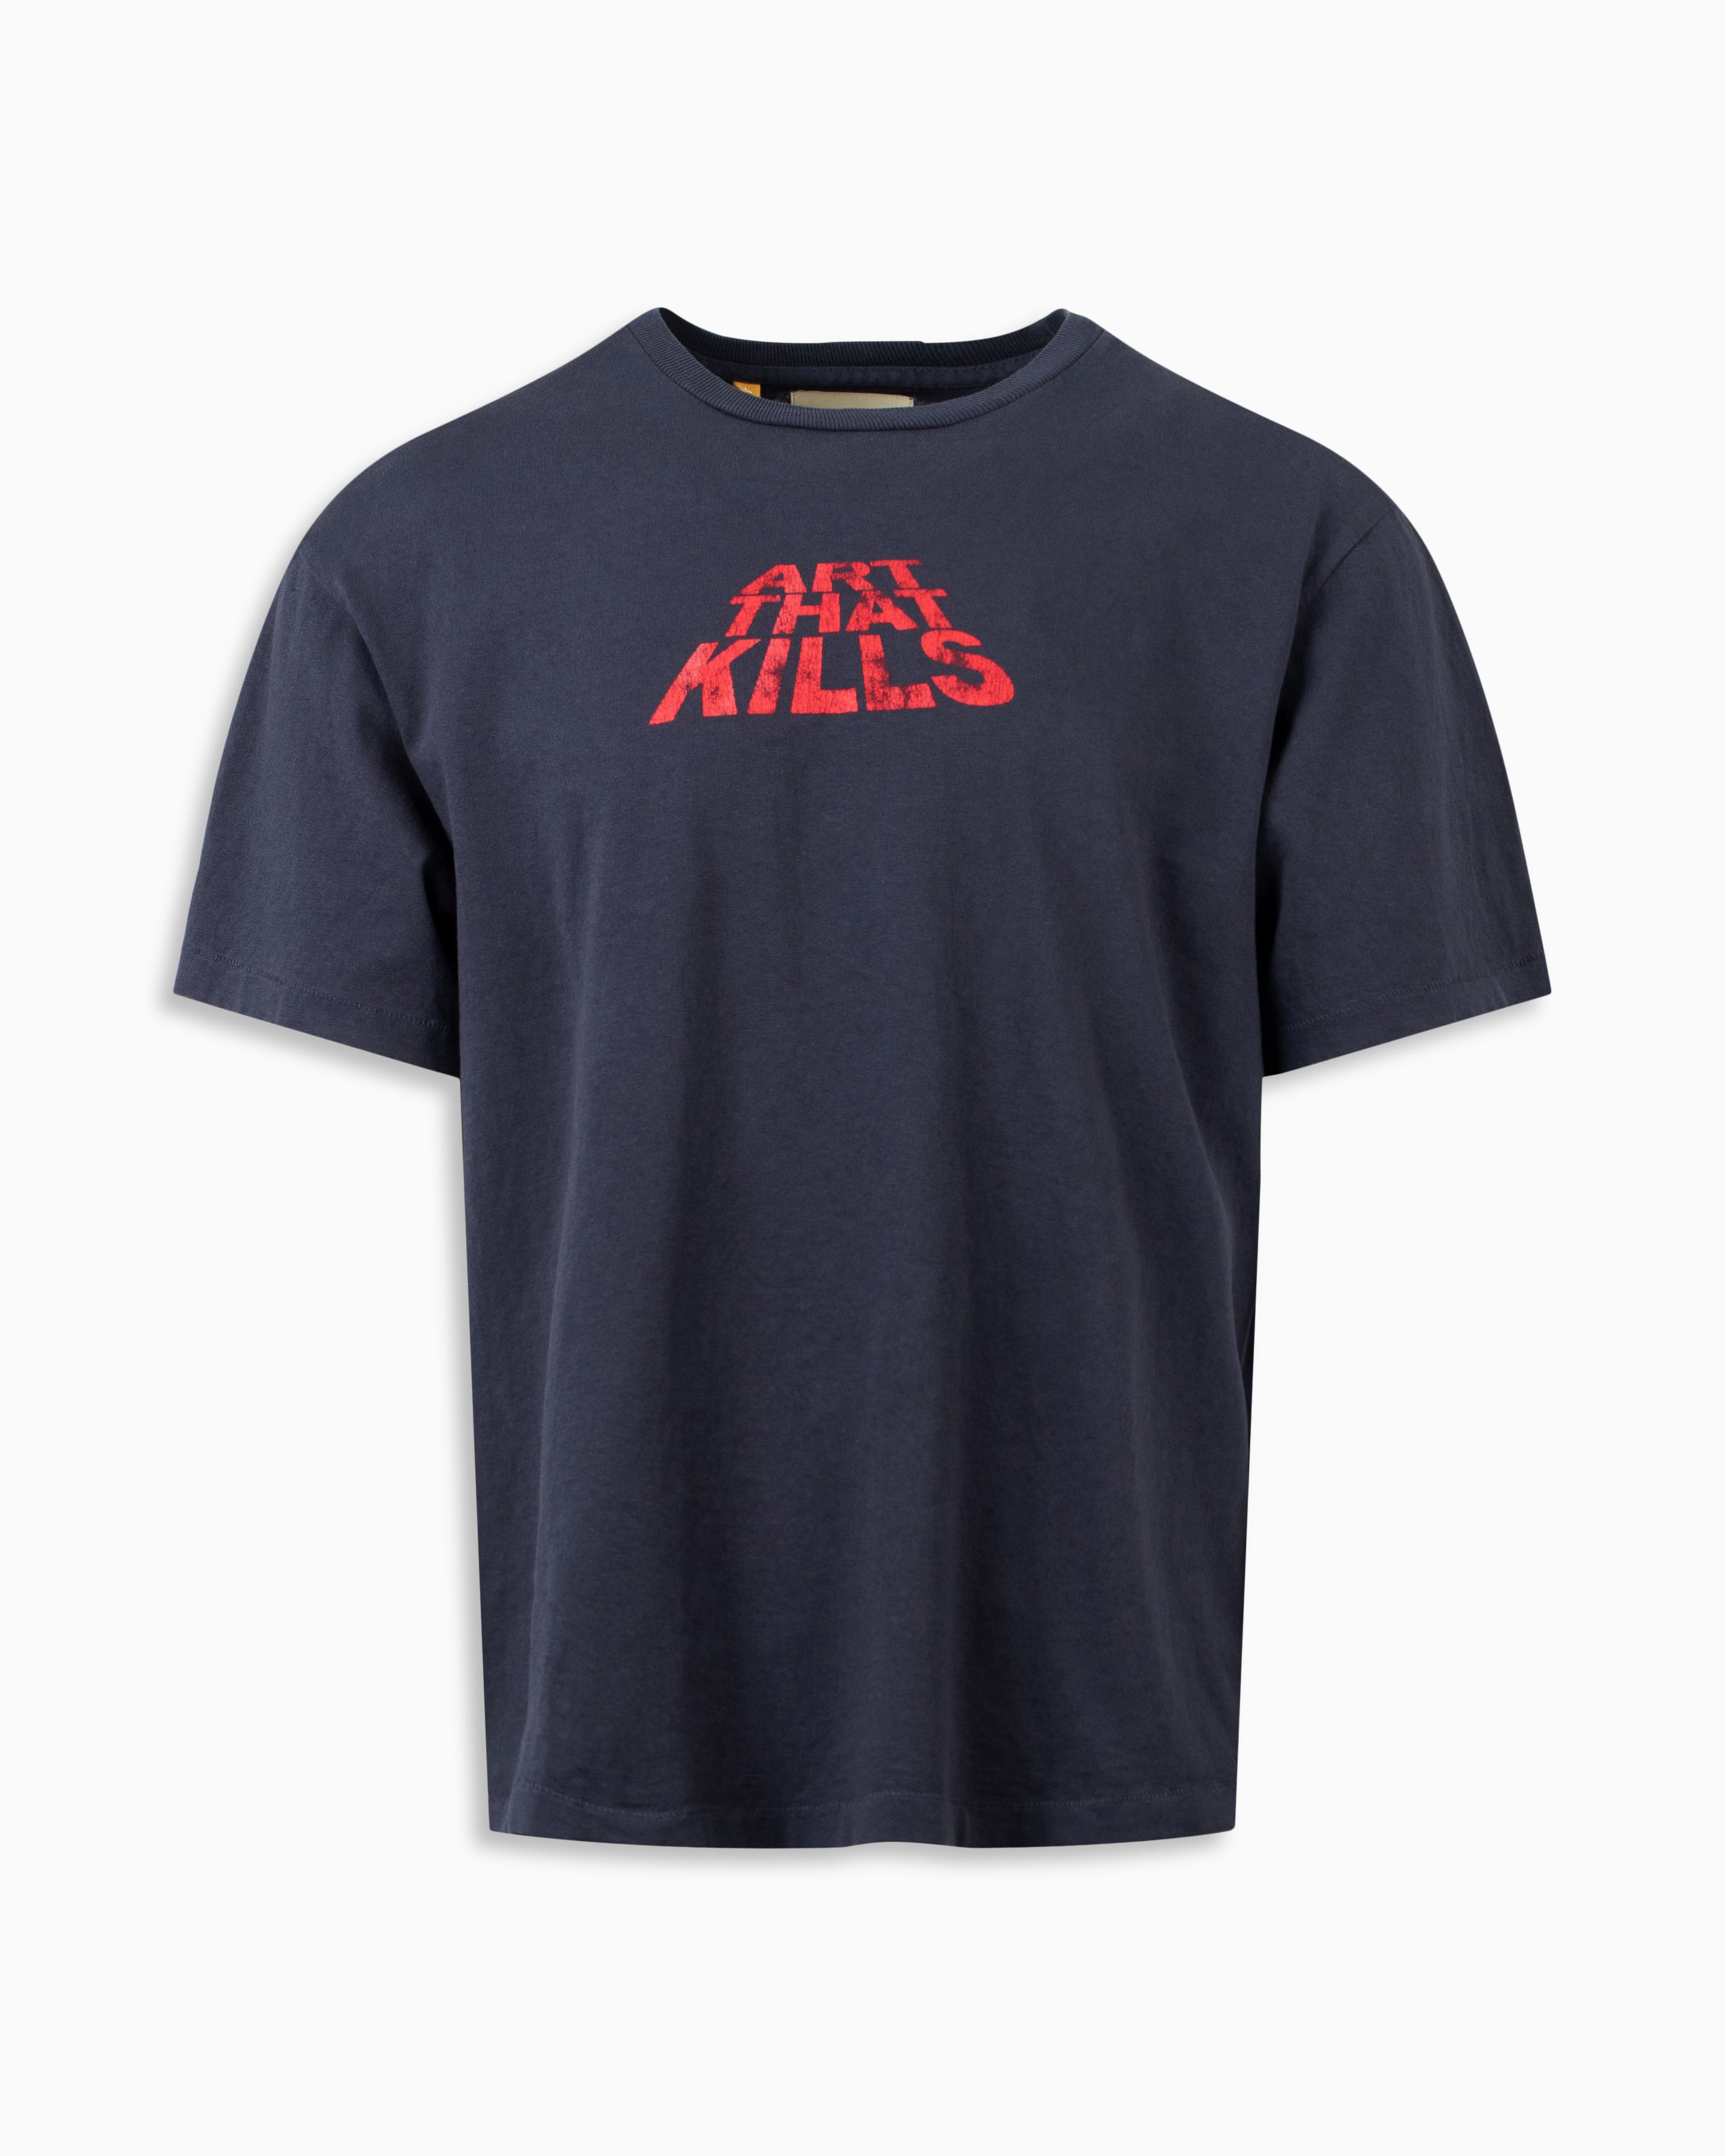 ATK Stack Logo Tee GALLERY DEPT. Tops T-Shirts Black